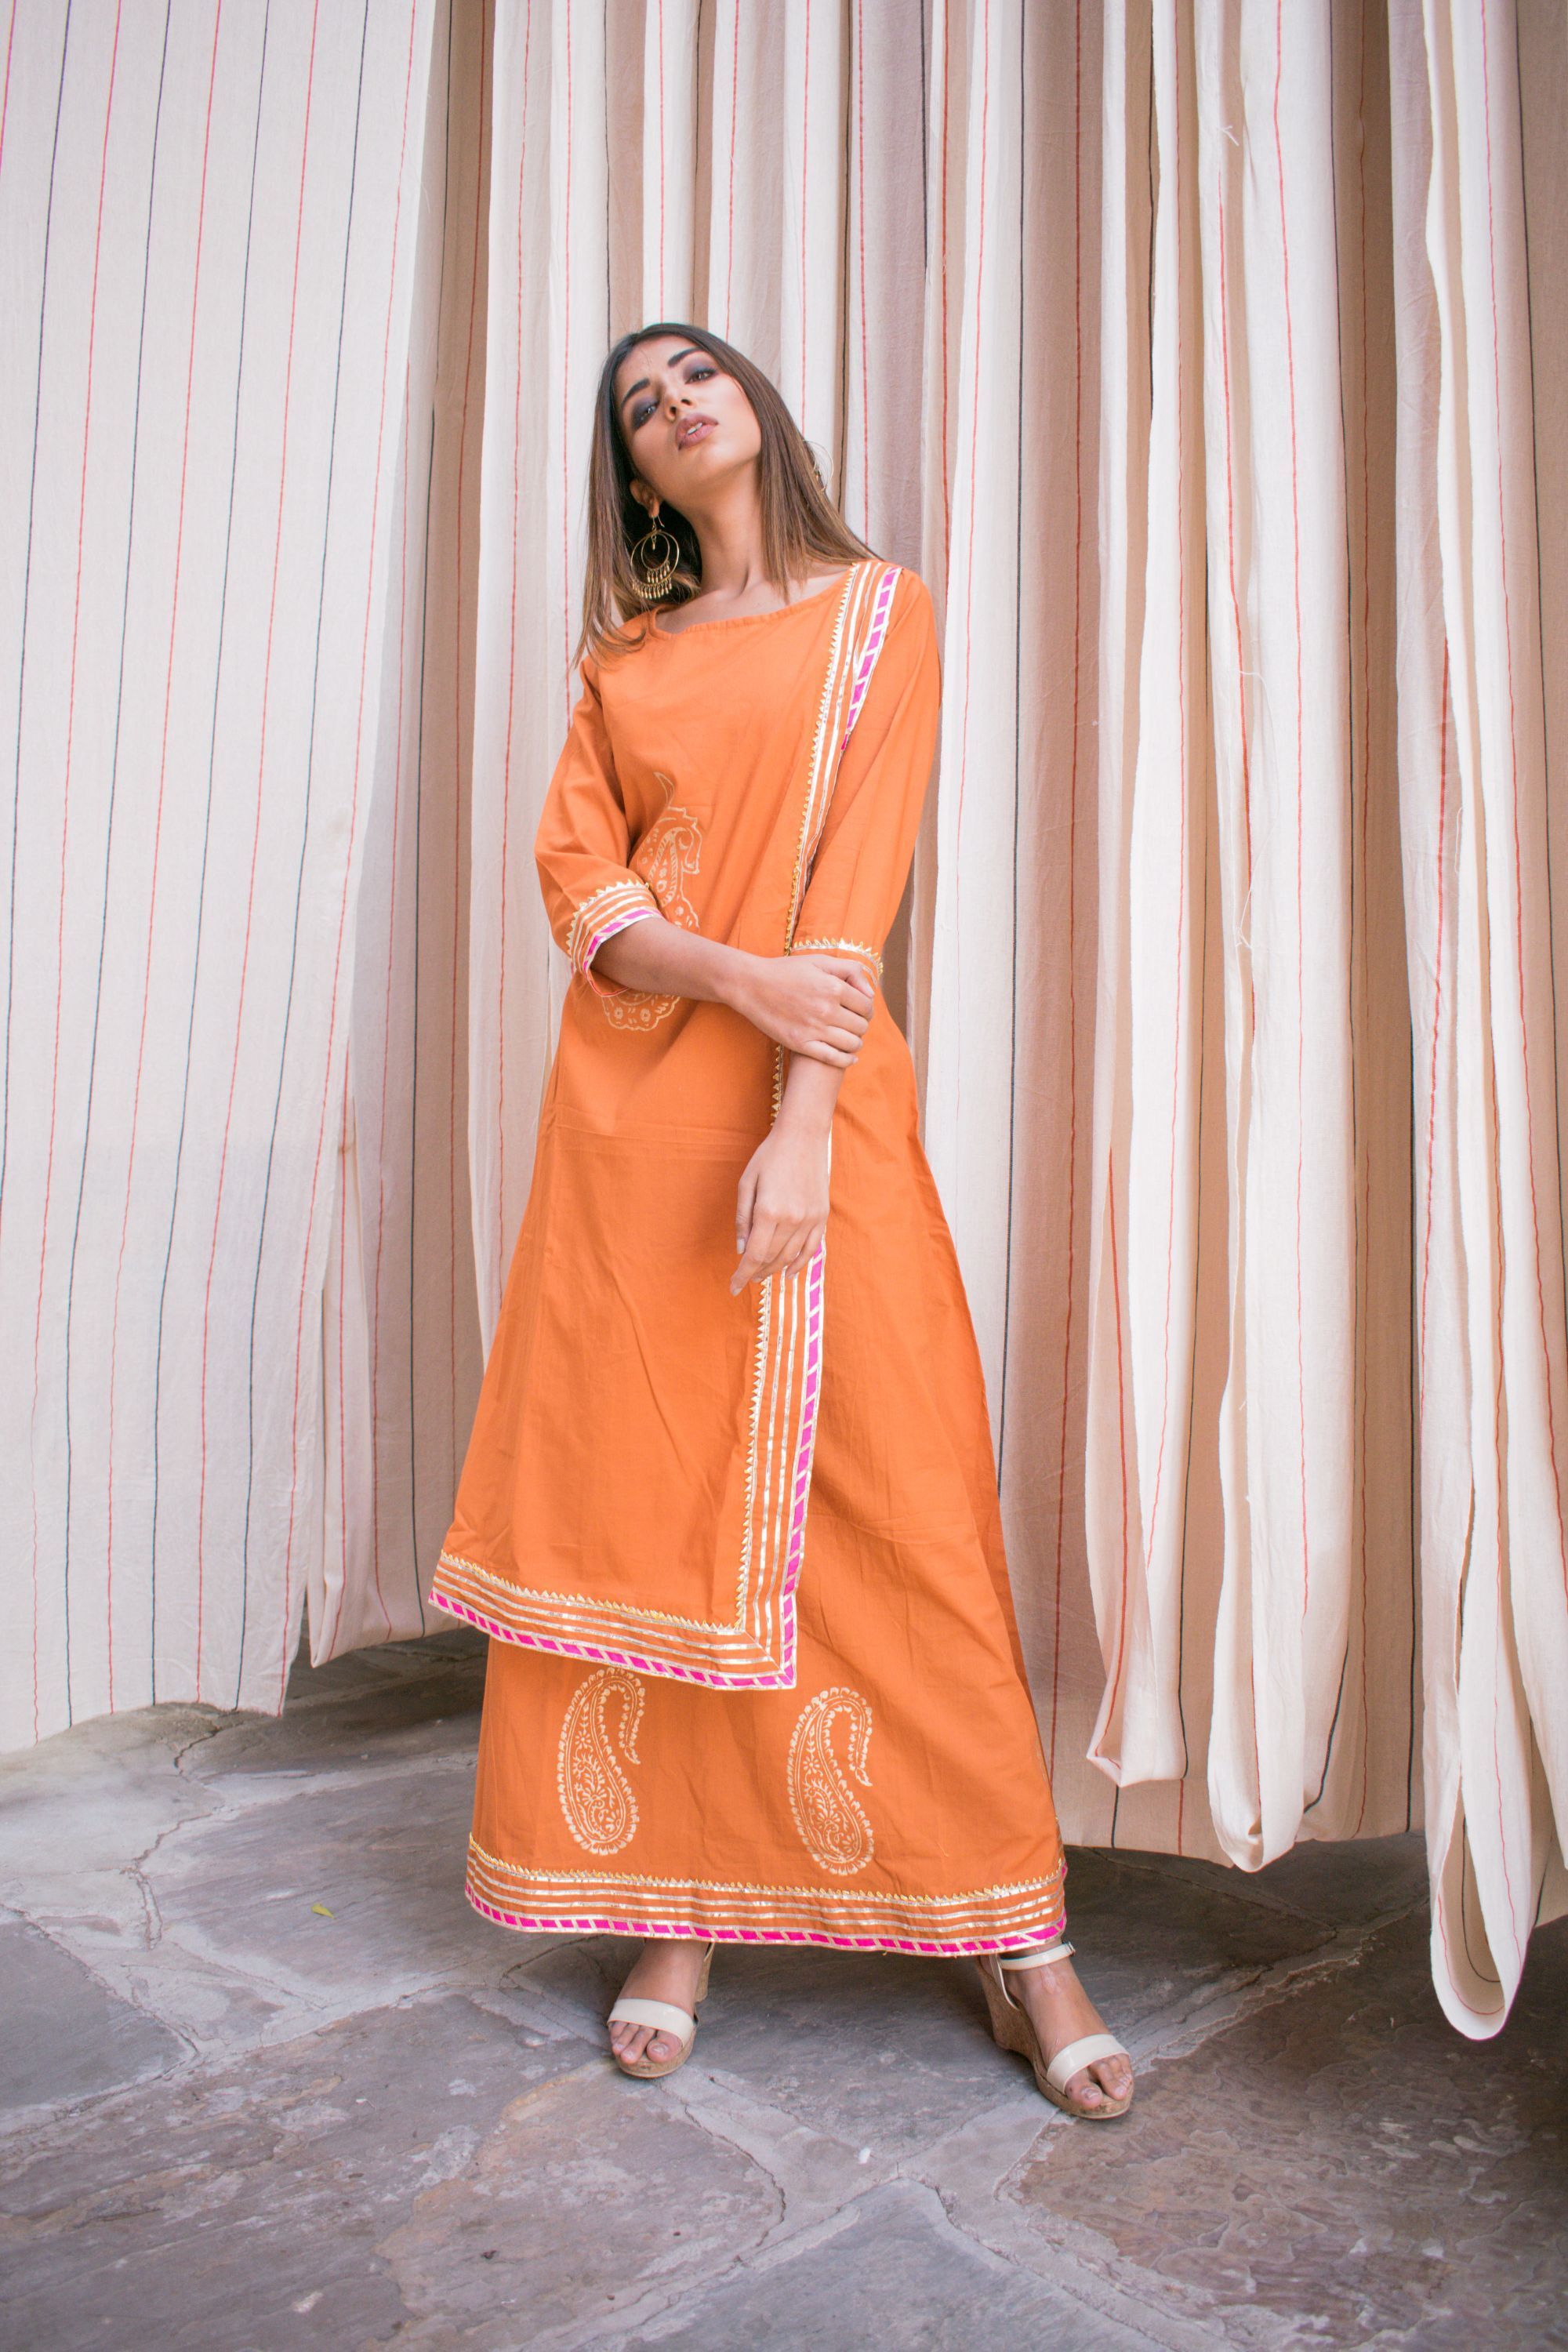 Women's Single-Piece Orange Cotton Dress With Hand Block Printed Motifs. - Saras The Label